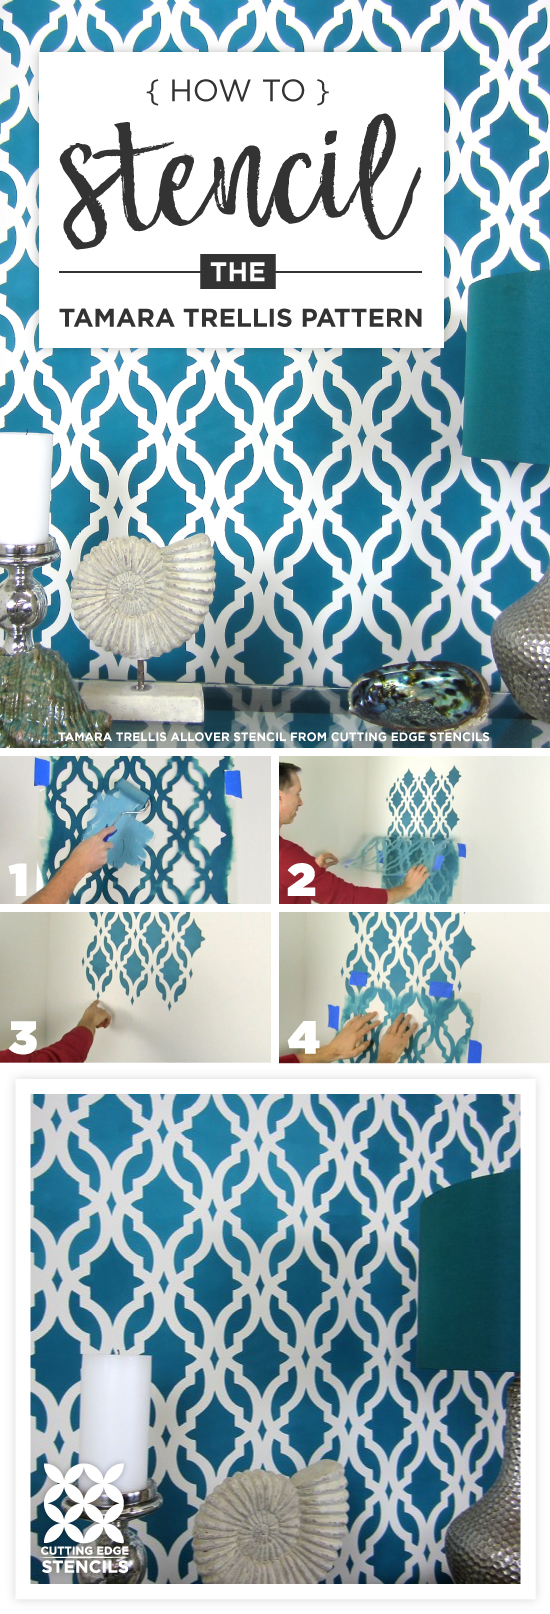 Cutting Edge Stencils shares a stencil tutorial showing how to paint an accent wall using a Moroccan wallpaper pattern, the Tamara Trellis Allover Stencil. http://www.cuttingedgestencils.com/tamara-trellis-allover-wall-stencils.html